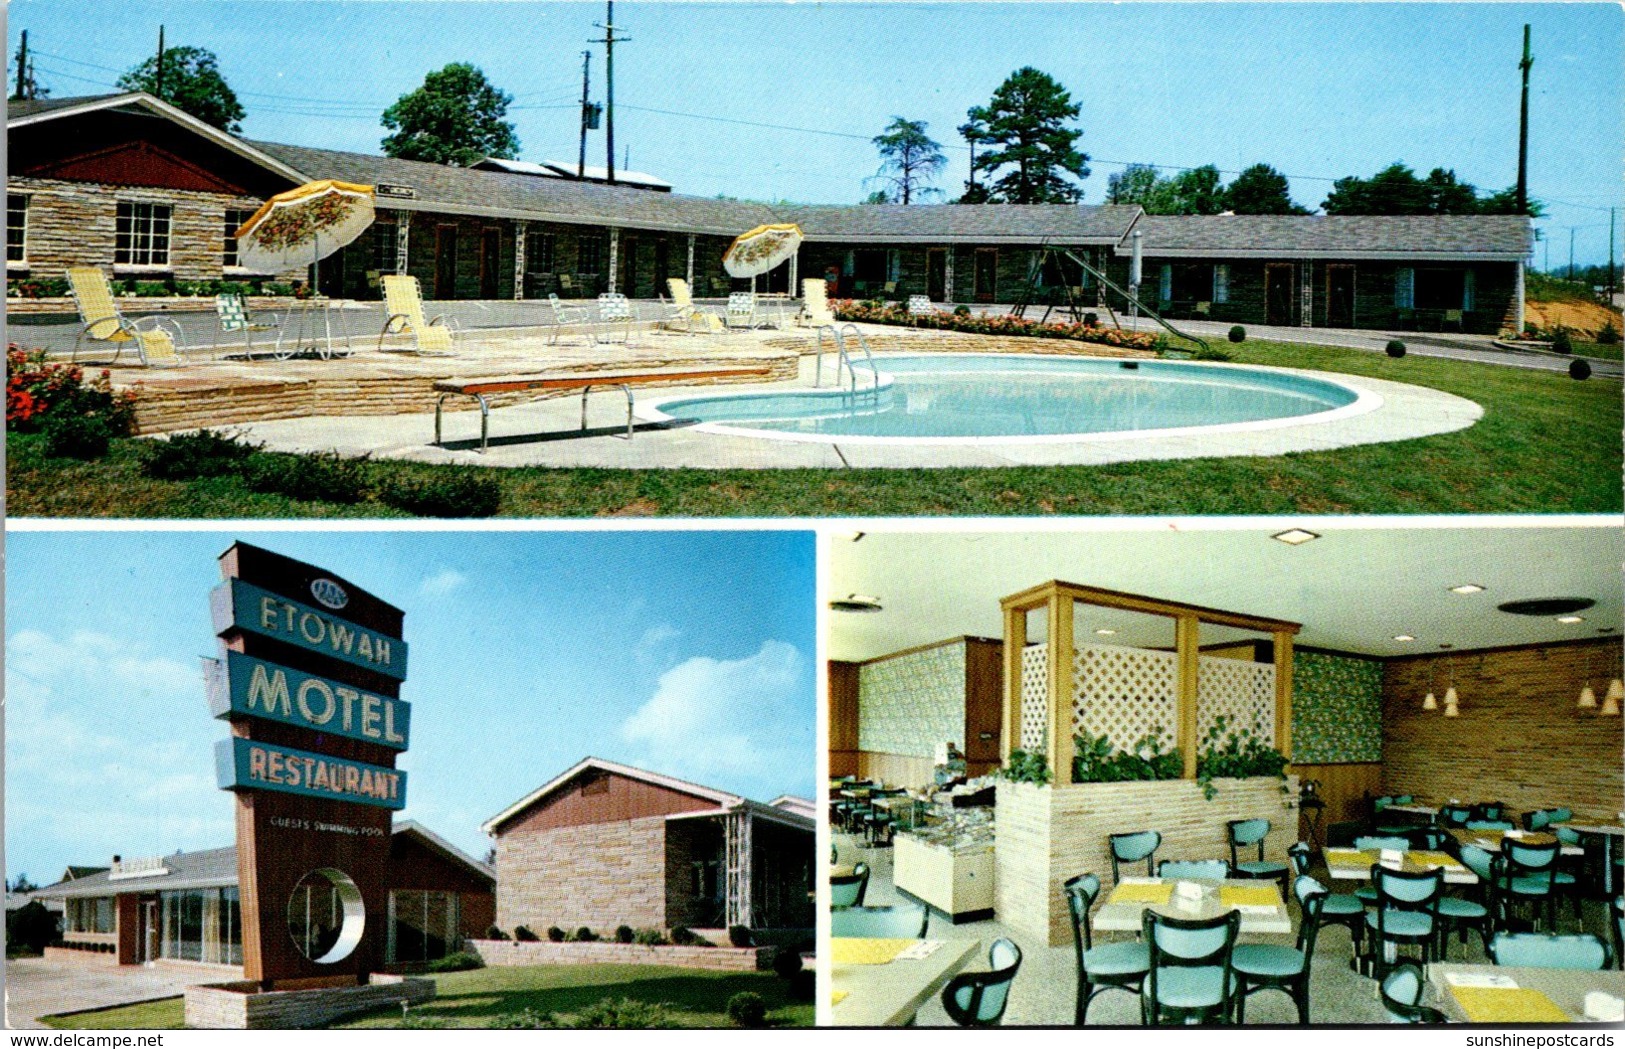 Tennessee Etowah Motel And Restaurant - Smokey Mountains